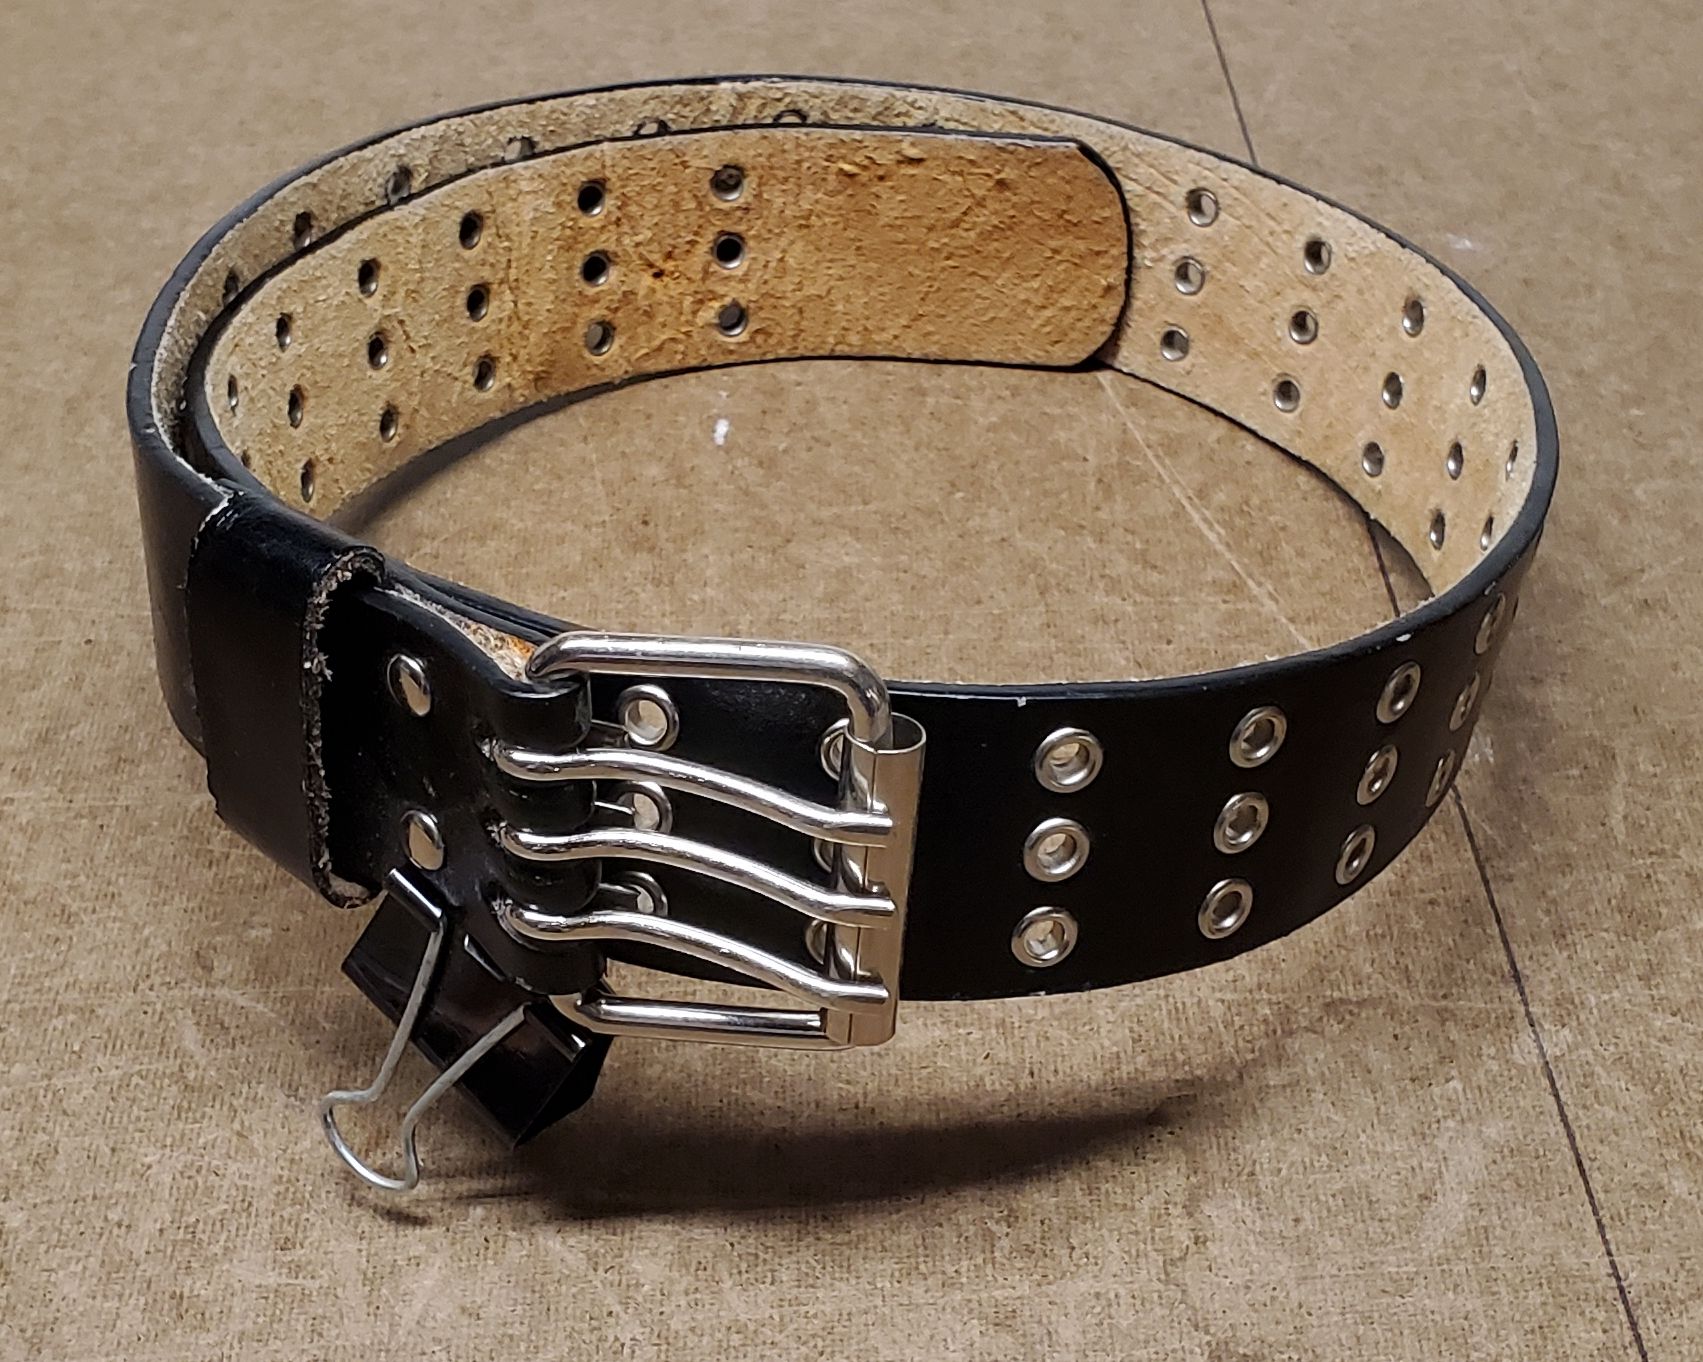 Black leather belt, 3-prong buckle